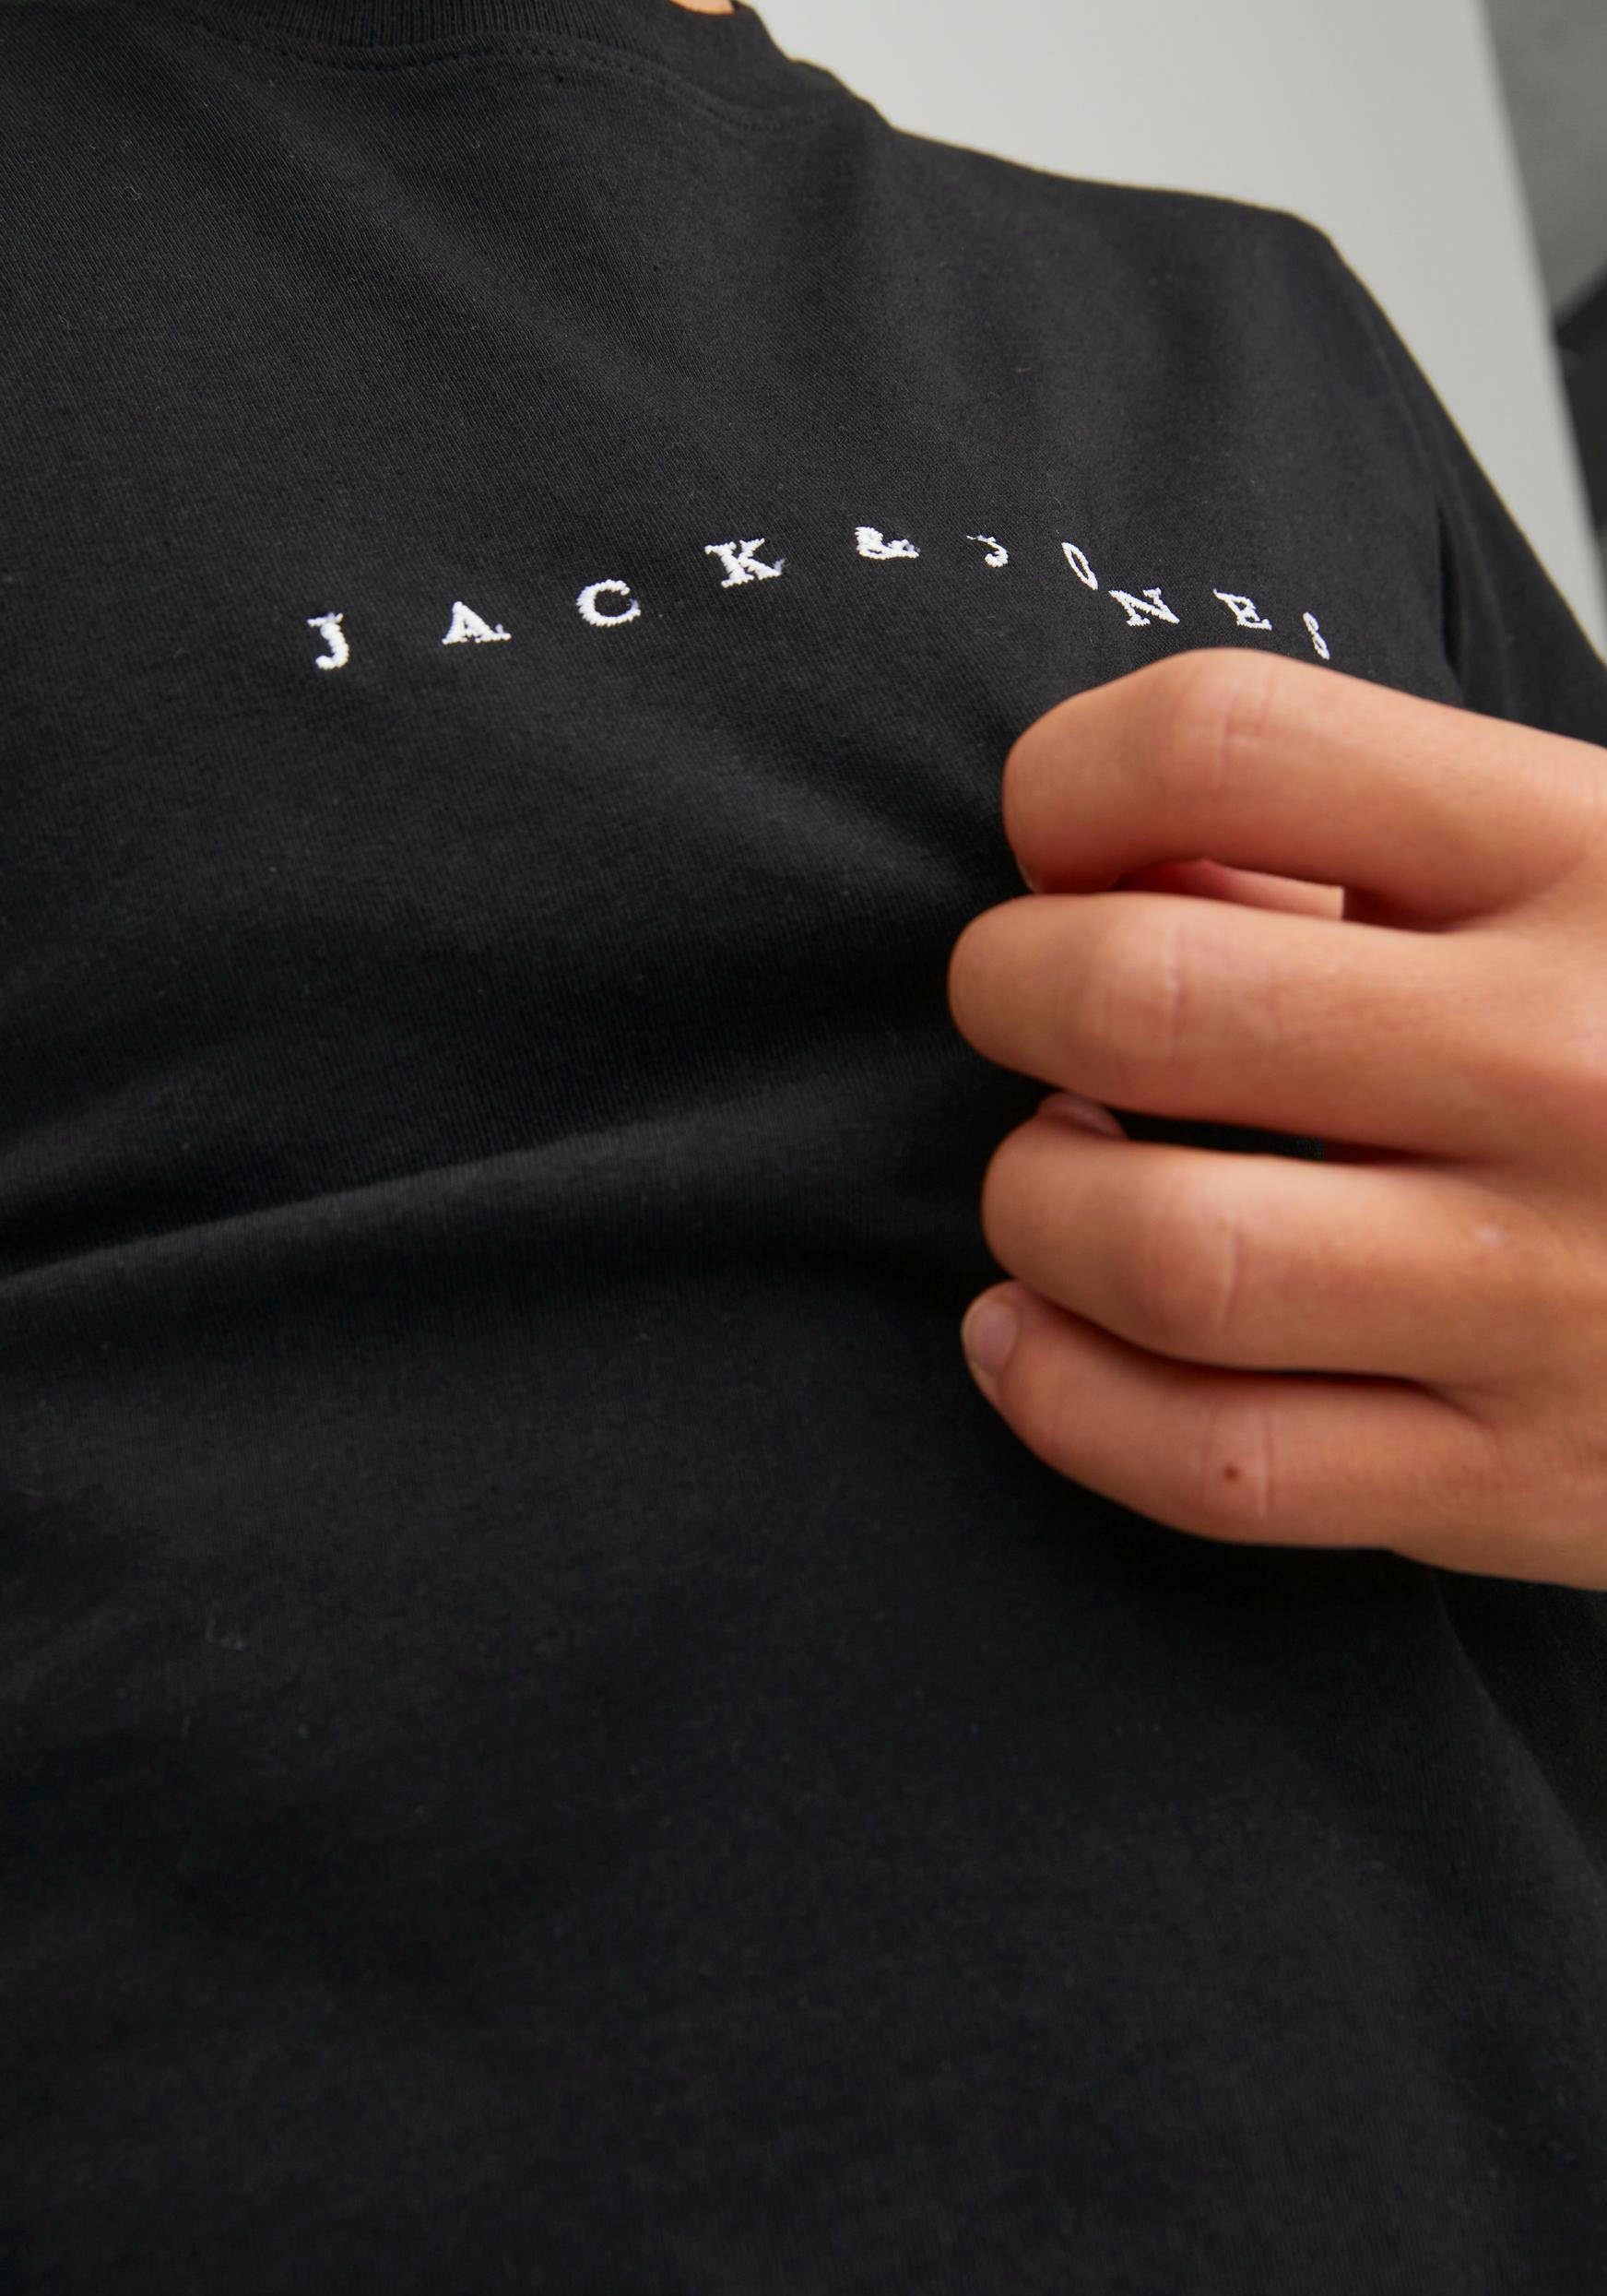 NECK JORCOPENHAGEN Jack & TEE Print CREW Jones JNR Black T-Shirt SS NOOS Junior